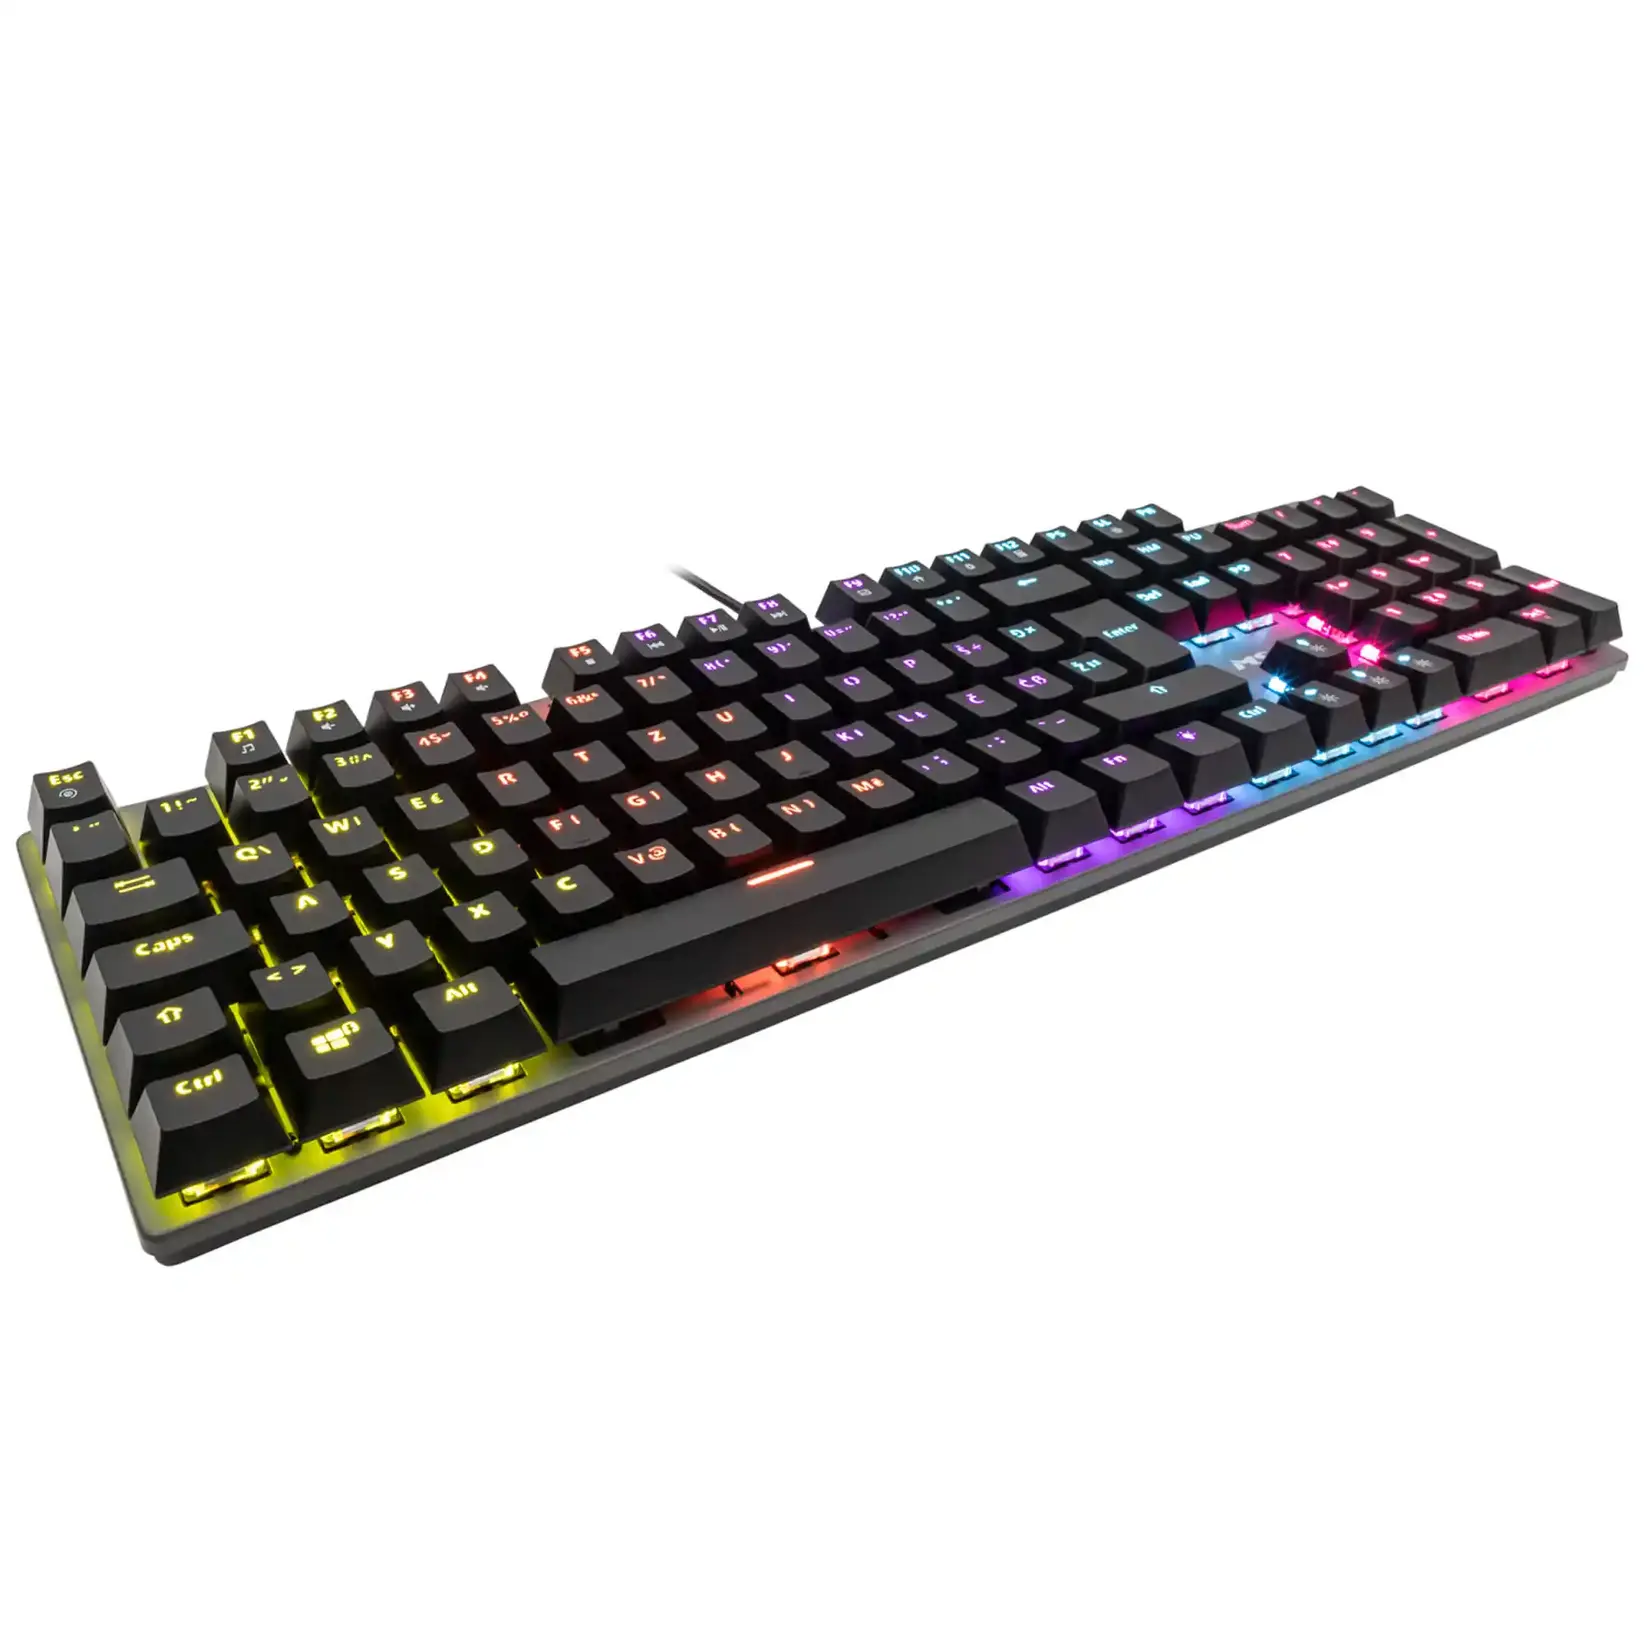 MS Mehanička gaming tastatura sa pozadinskim osvetljenjem RGB Elite C521 crna